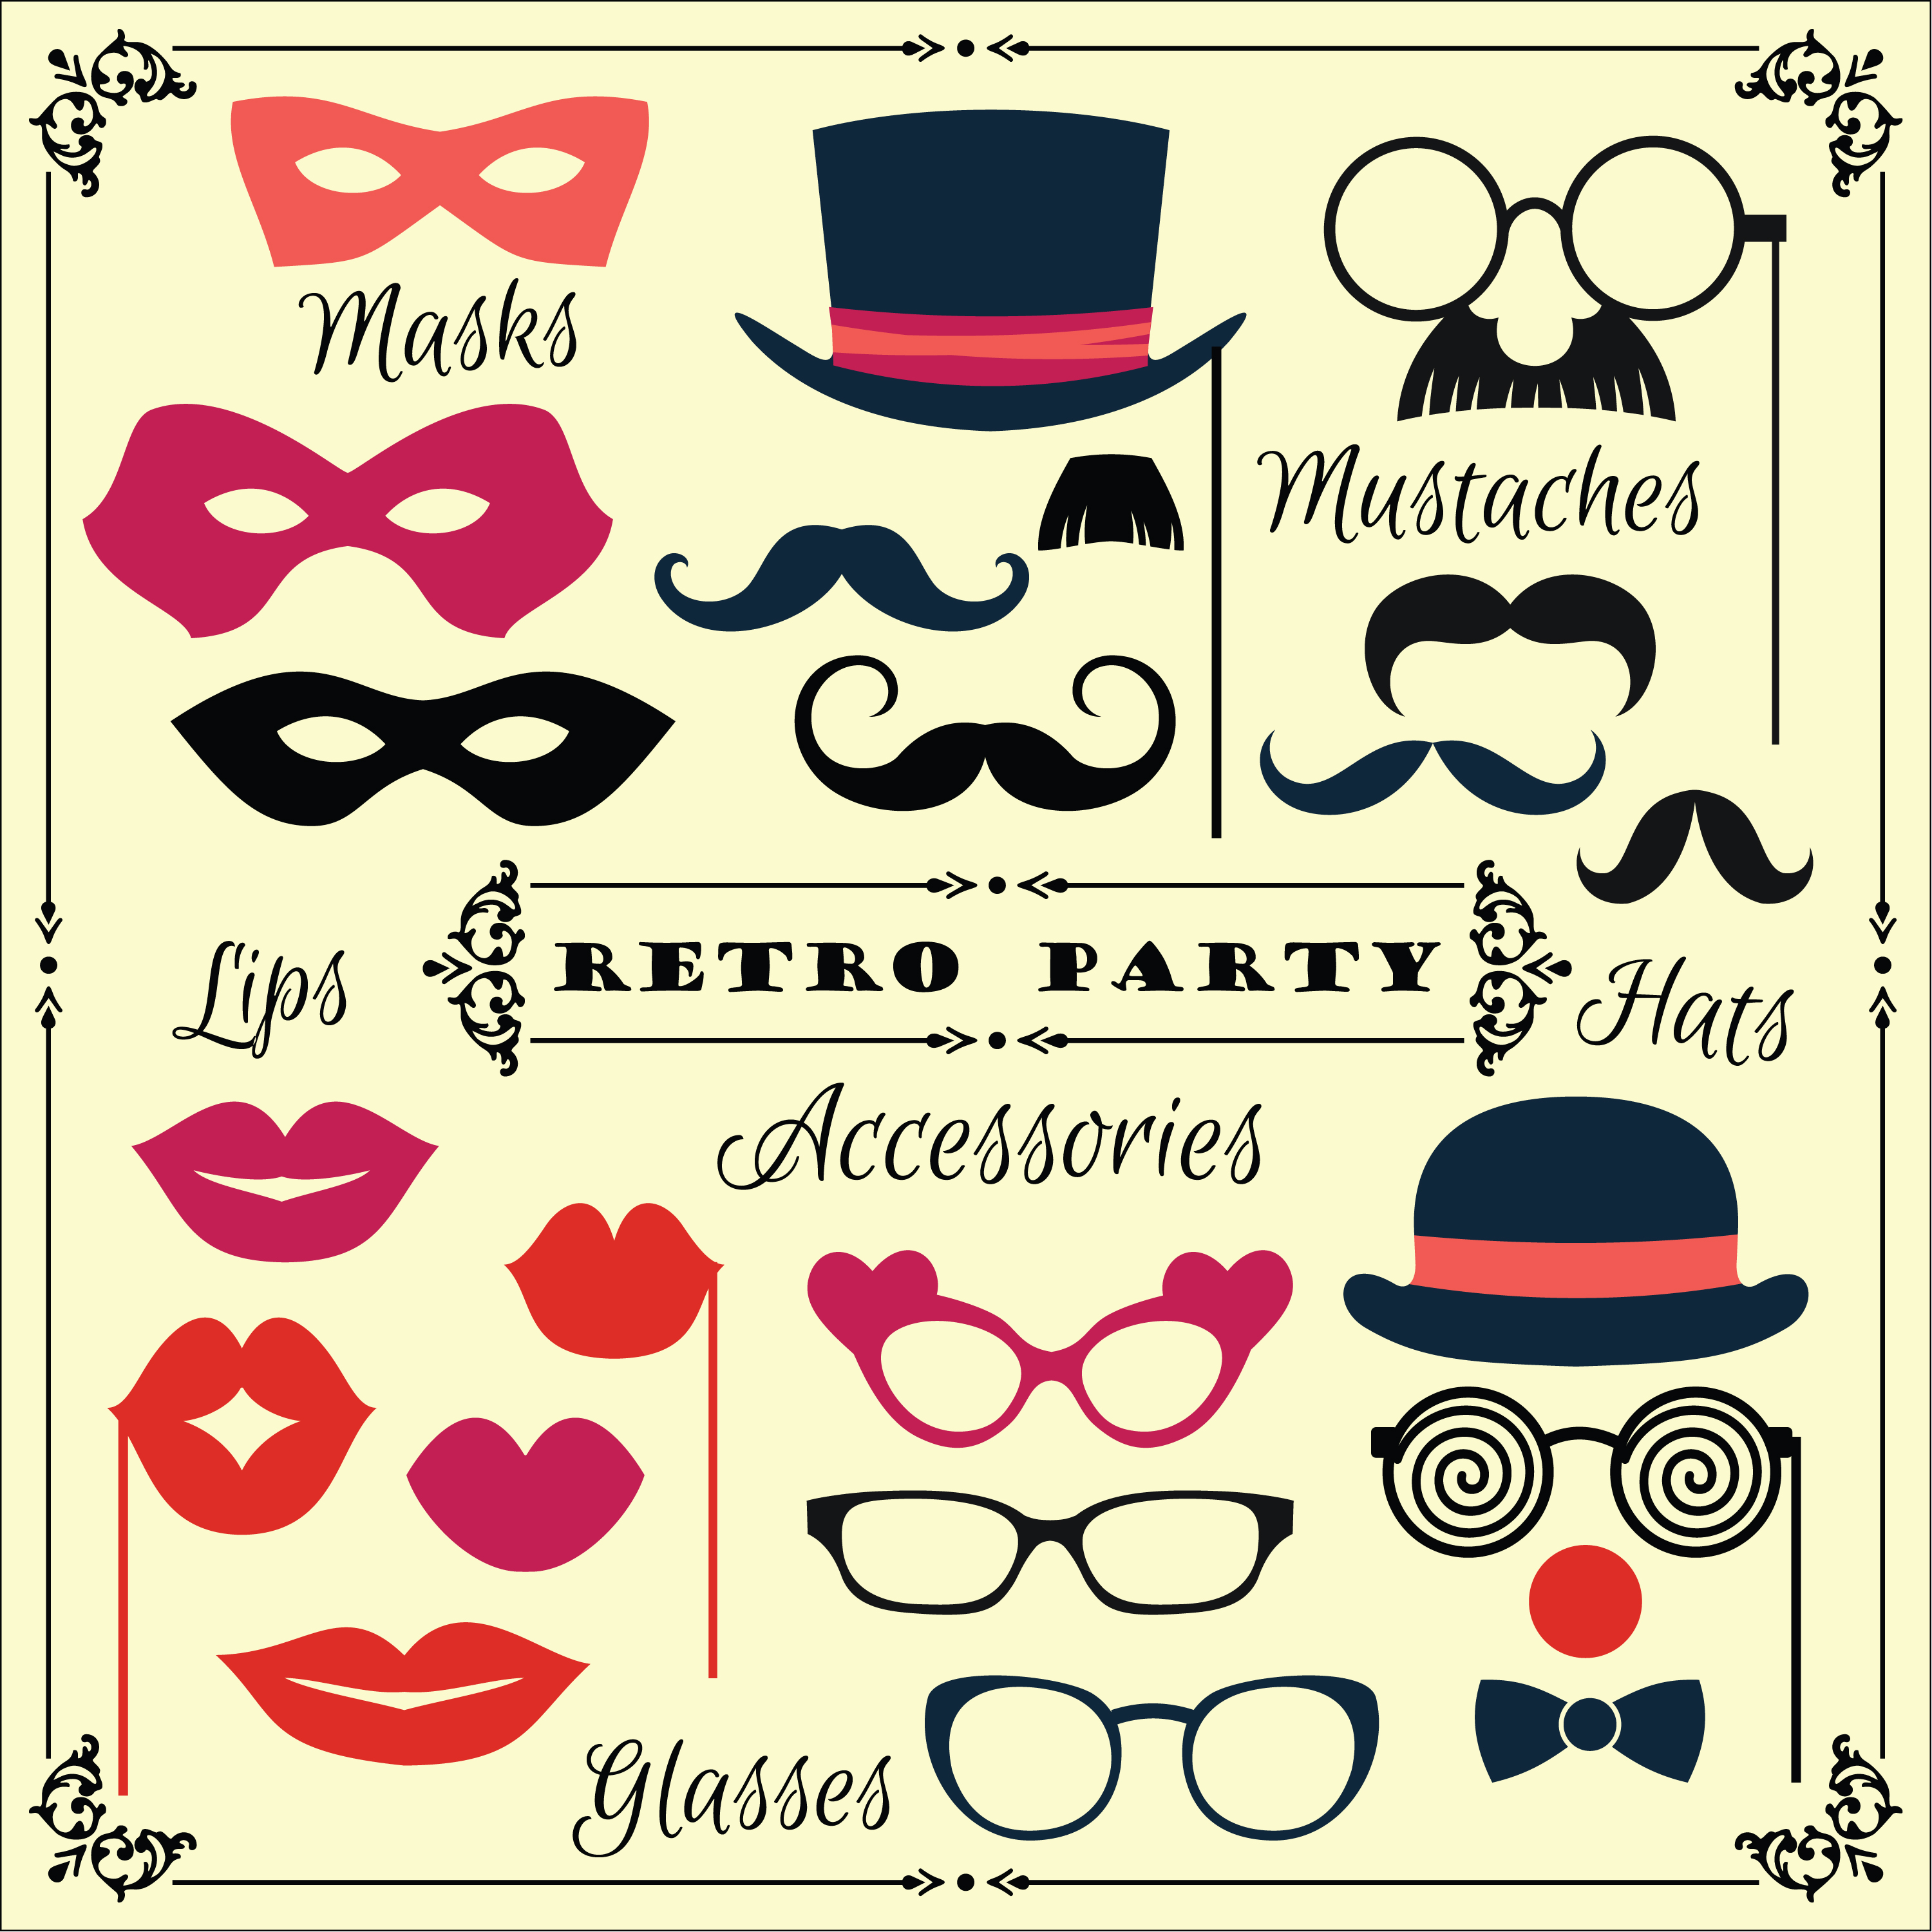  Accessories for fun retro party. Vector illustration Photoshop brush